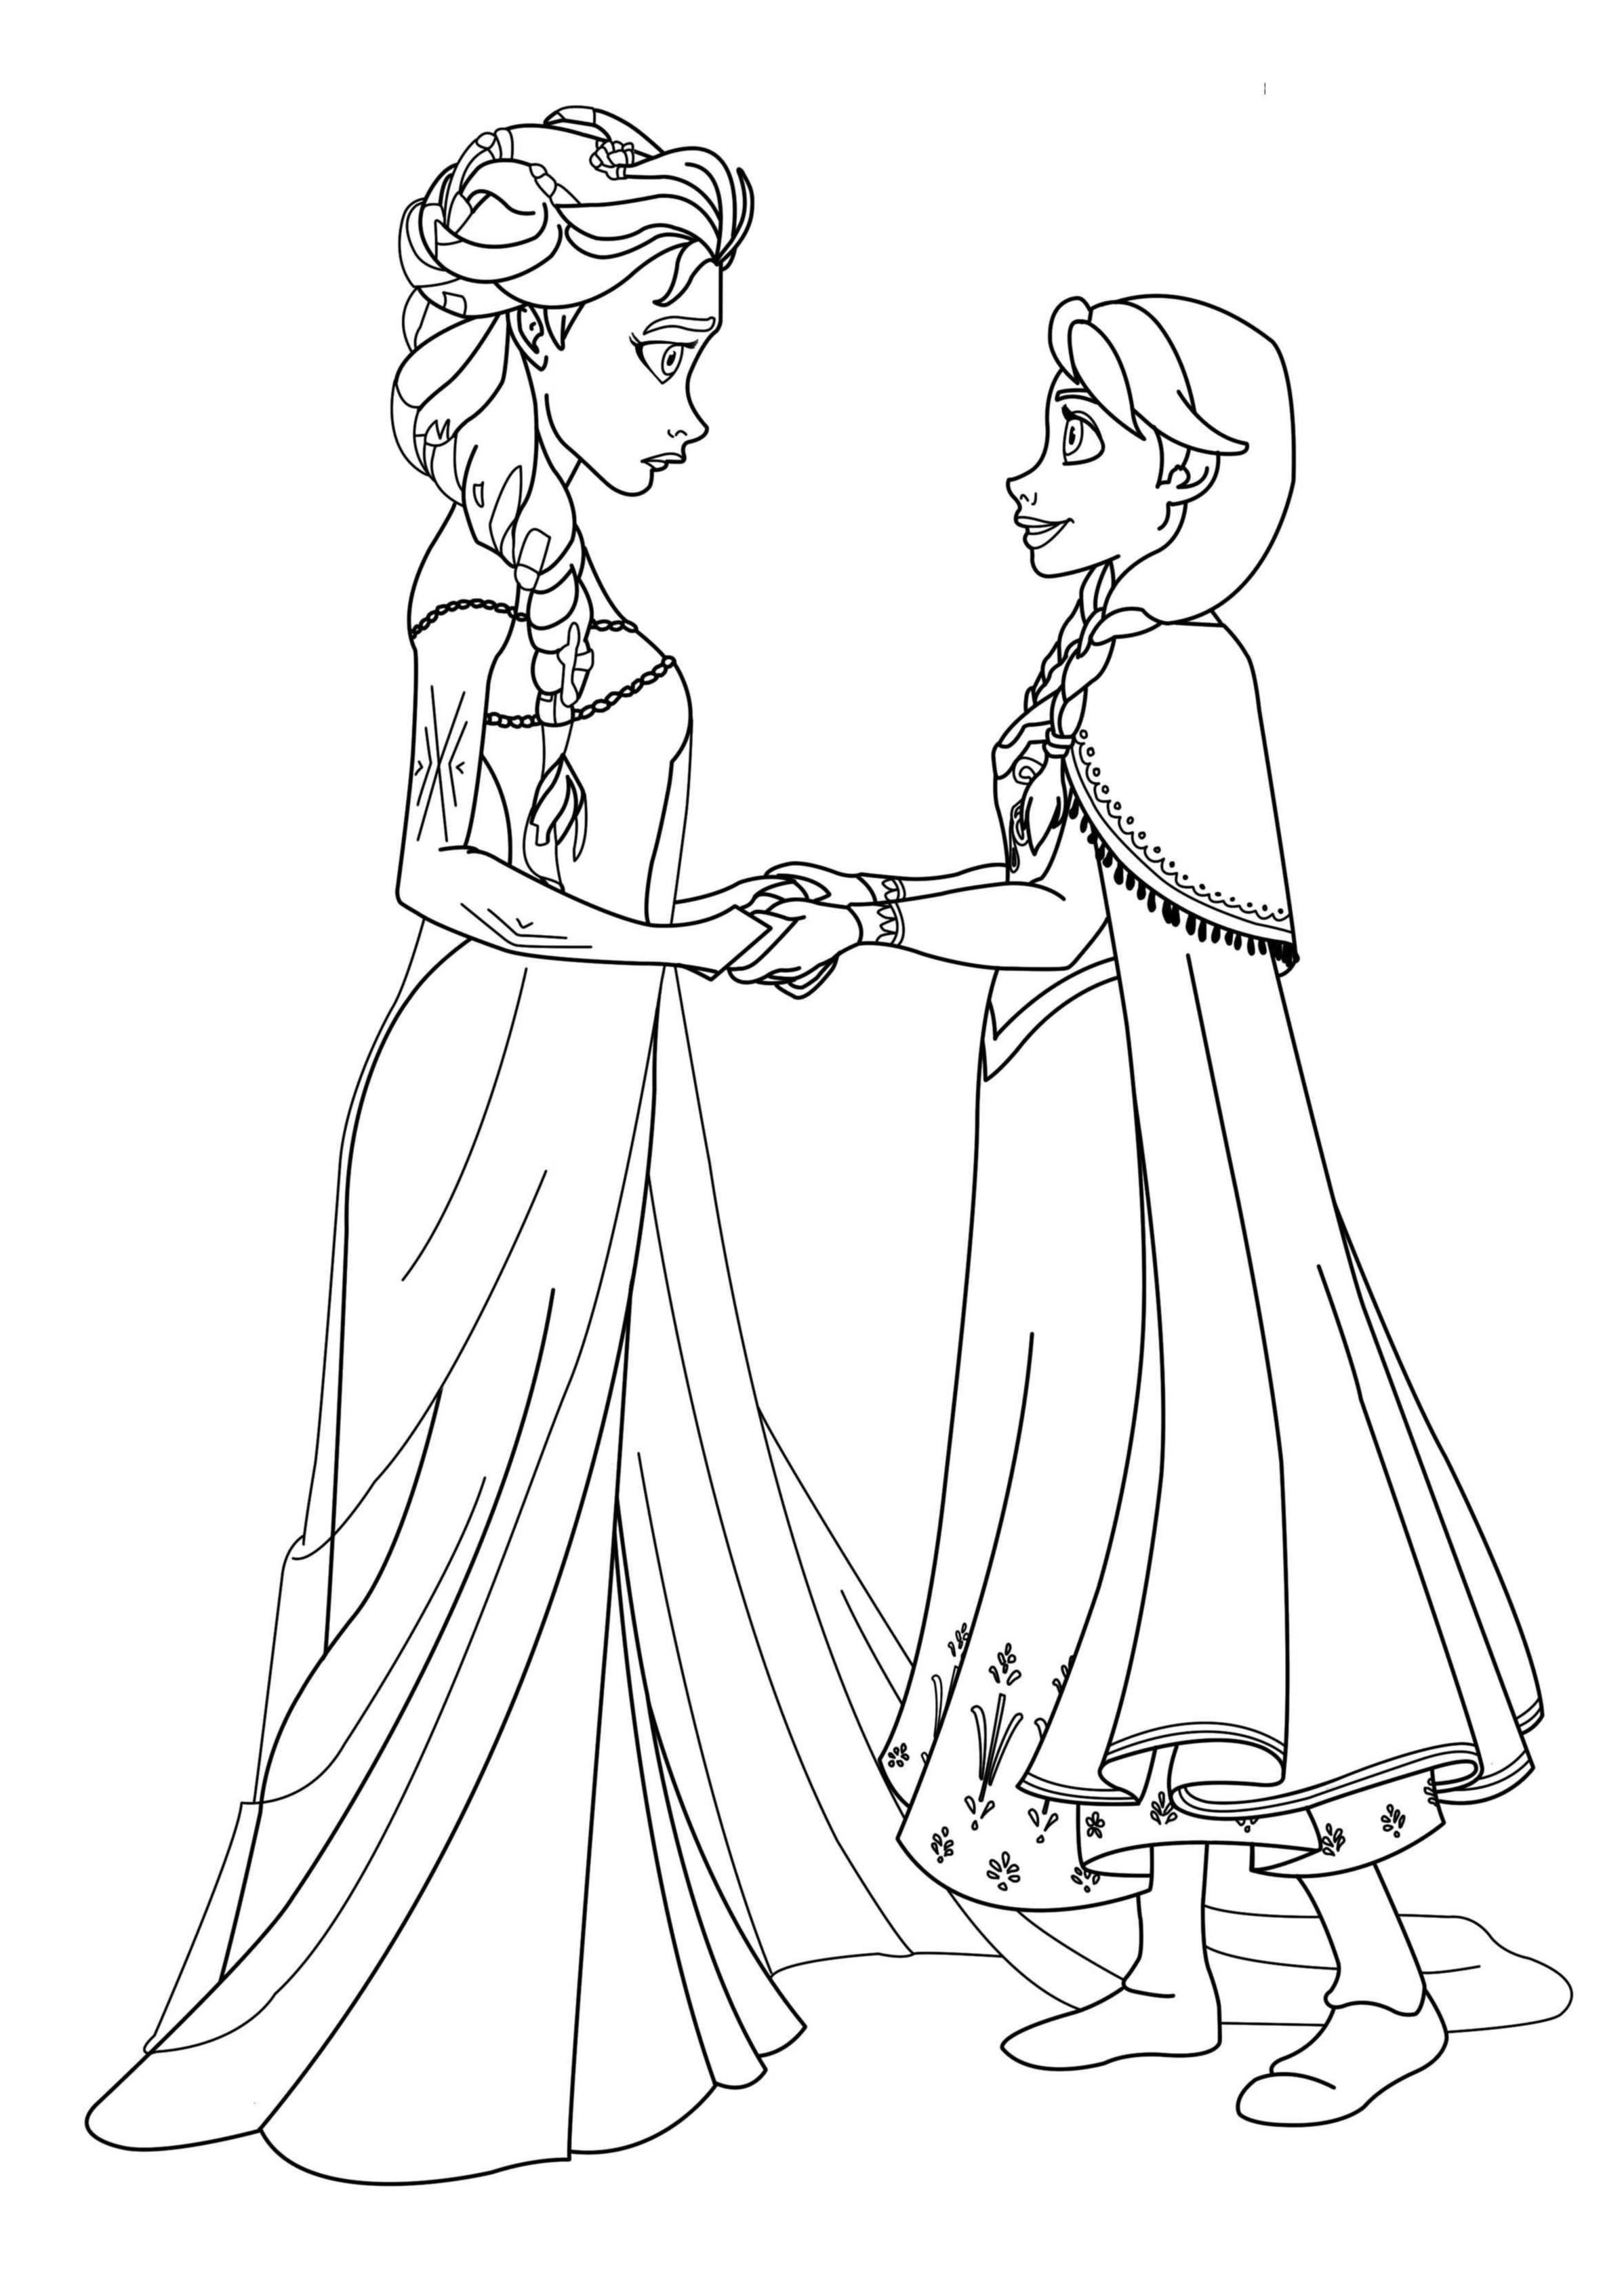 Anna et Elsa, les princesses de Frozen: O Reino do Gelo de Disney